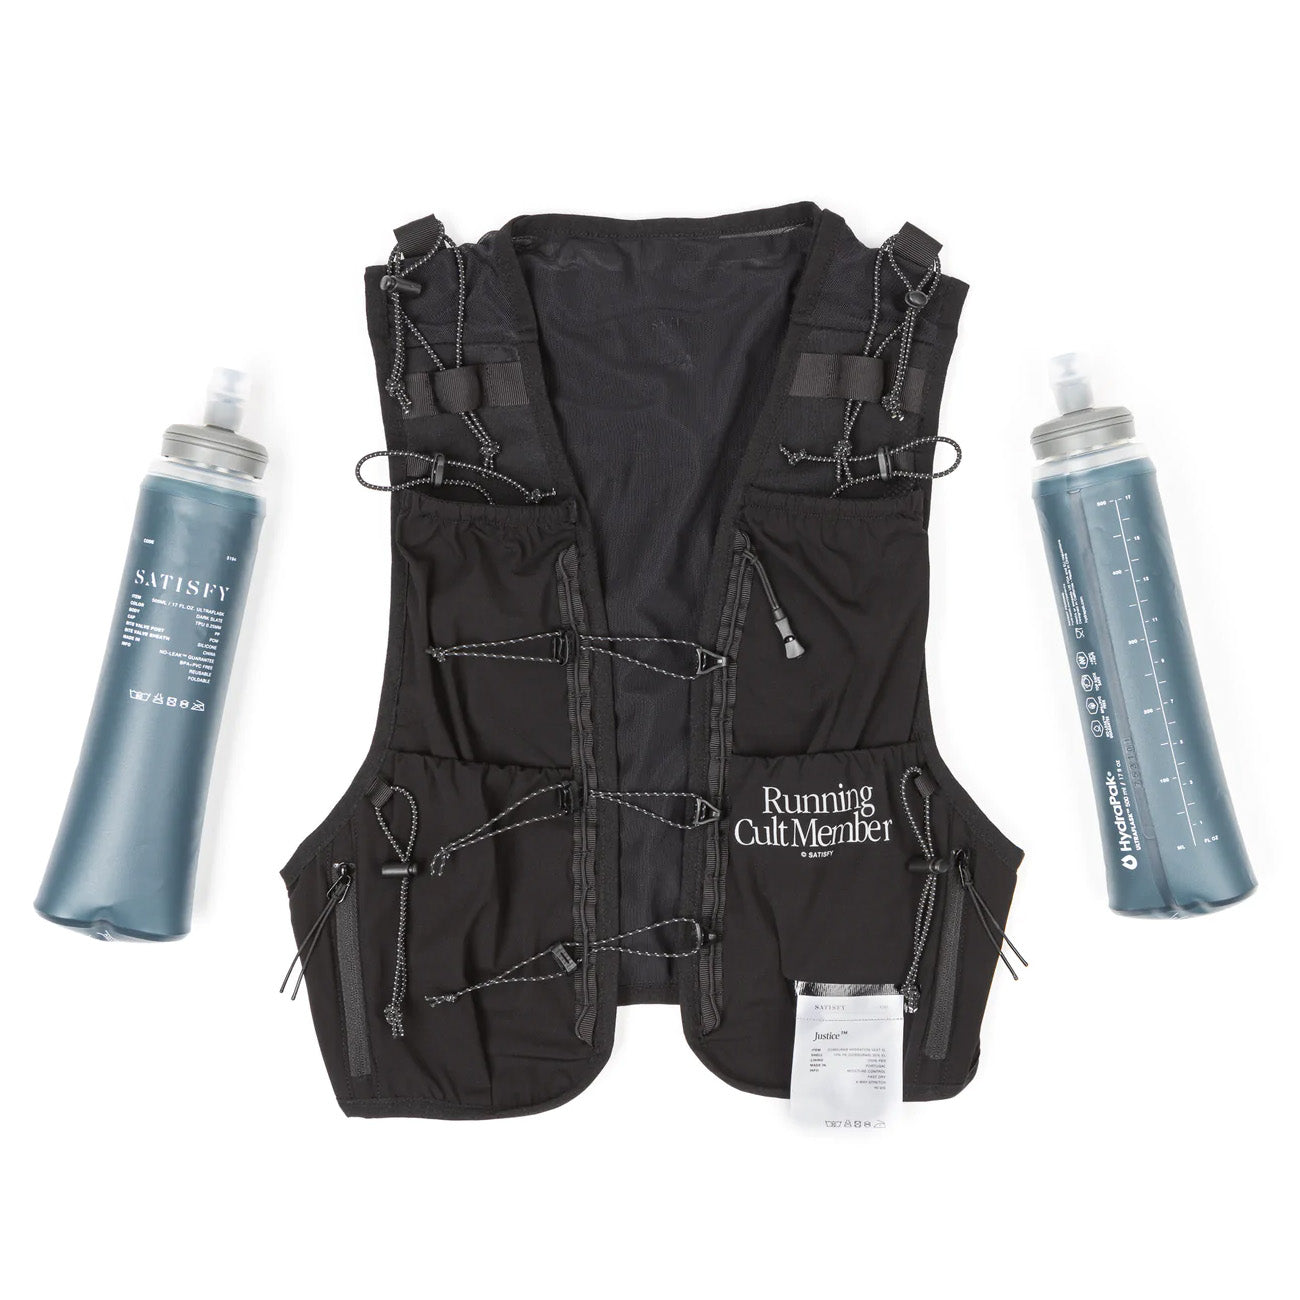 Satisfy Running Justice Cordura Hydration Vest 5L Black